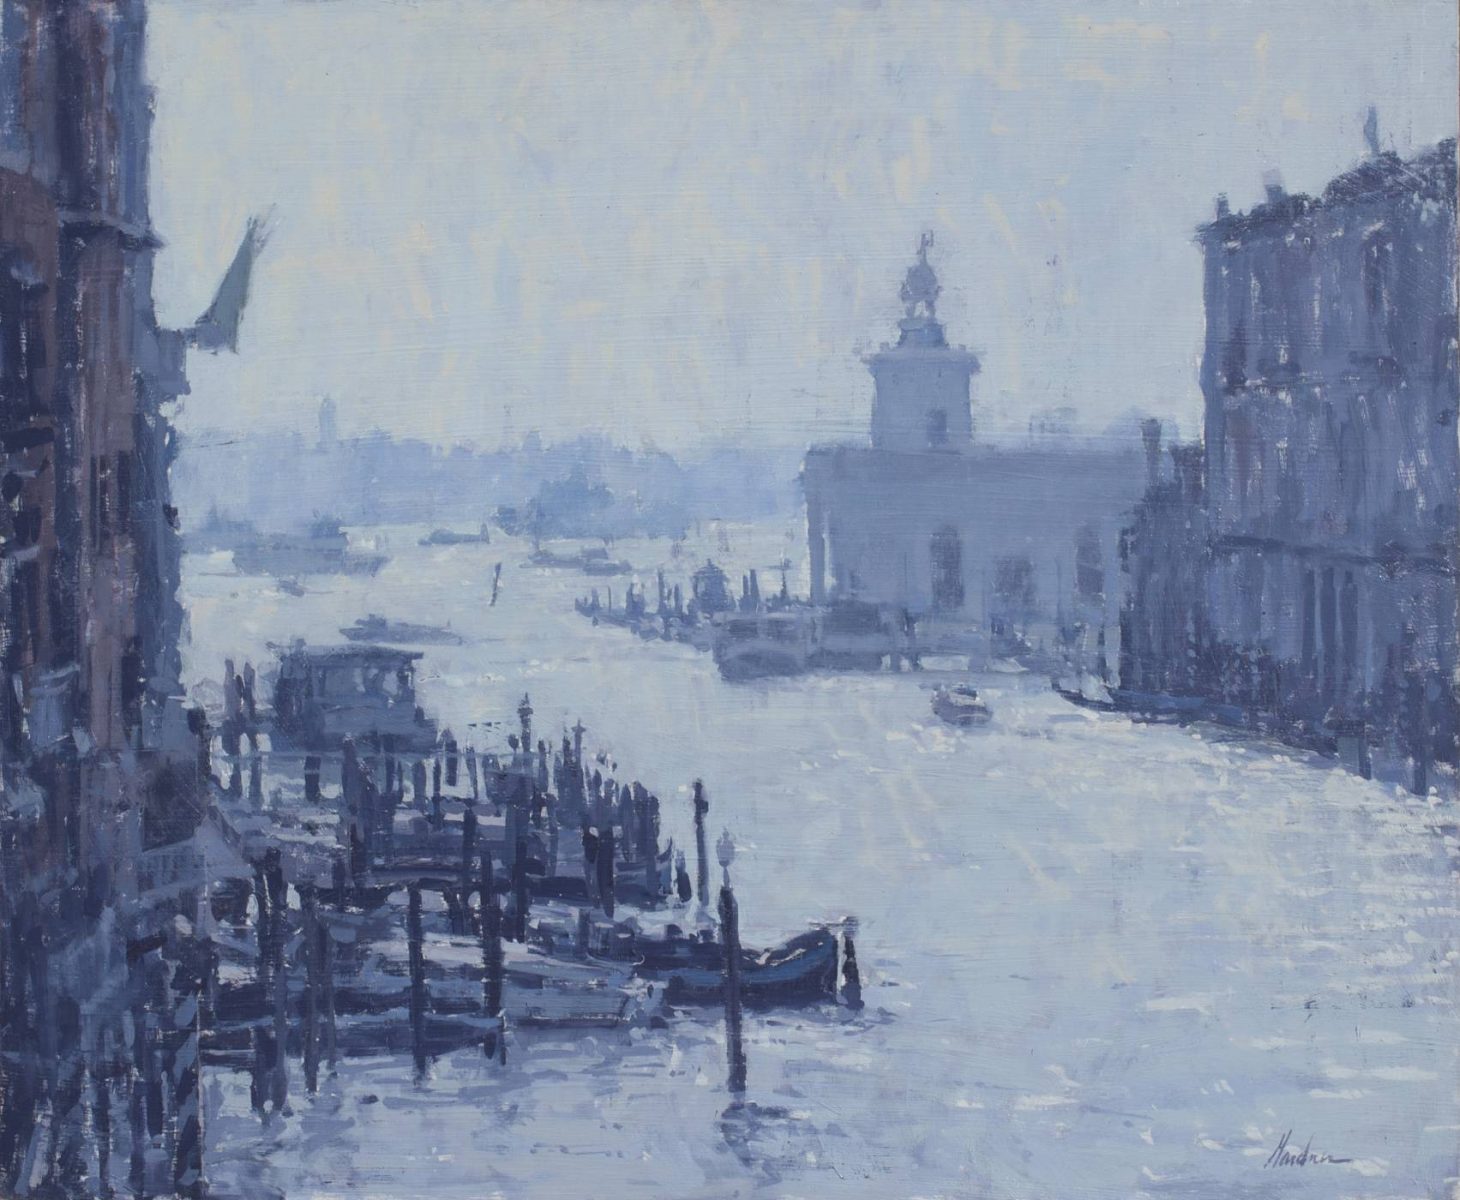 Grand Canal, Venice scene landscape painting by artist Frank Gardner